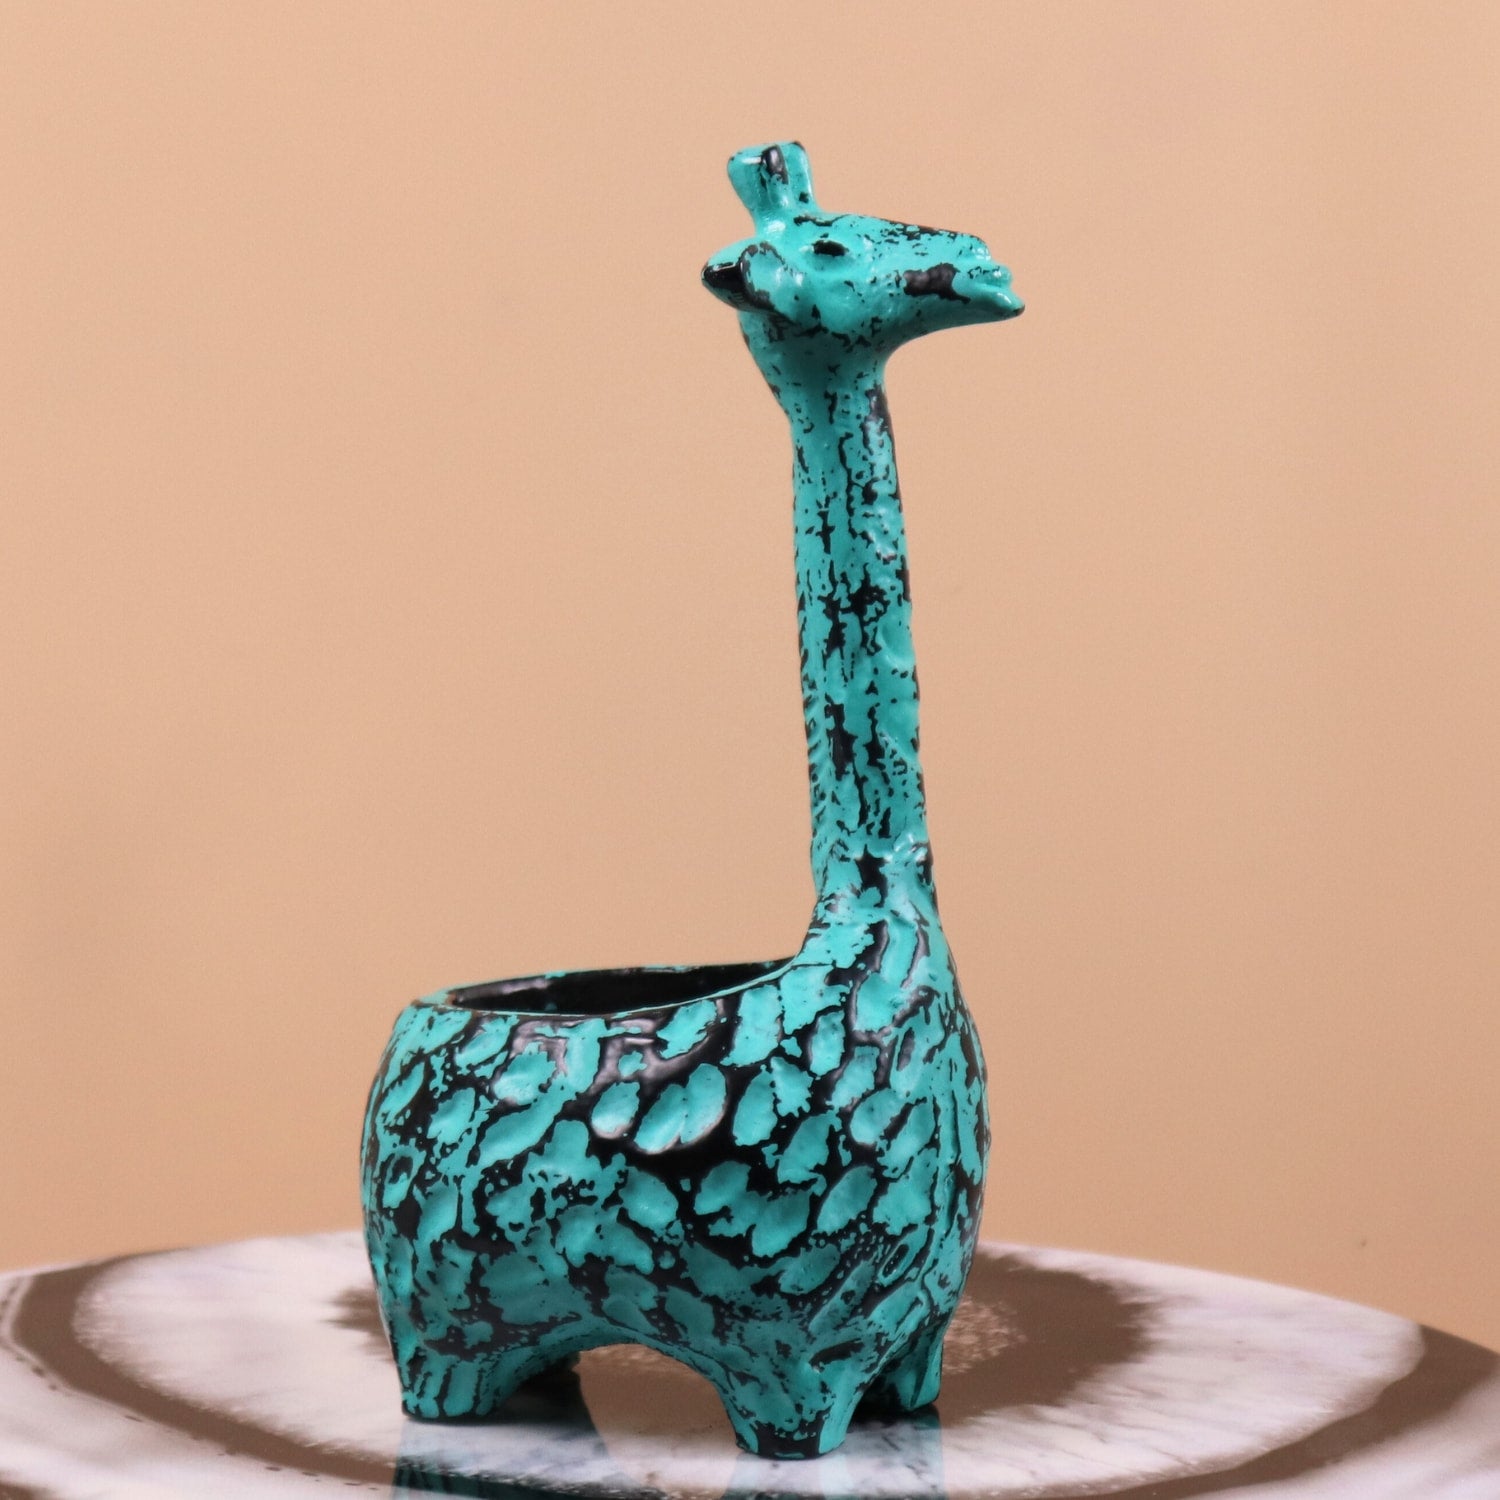 Giraffe table figurine, giraffe table sculpture